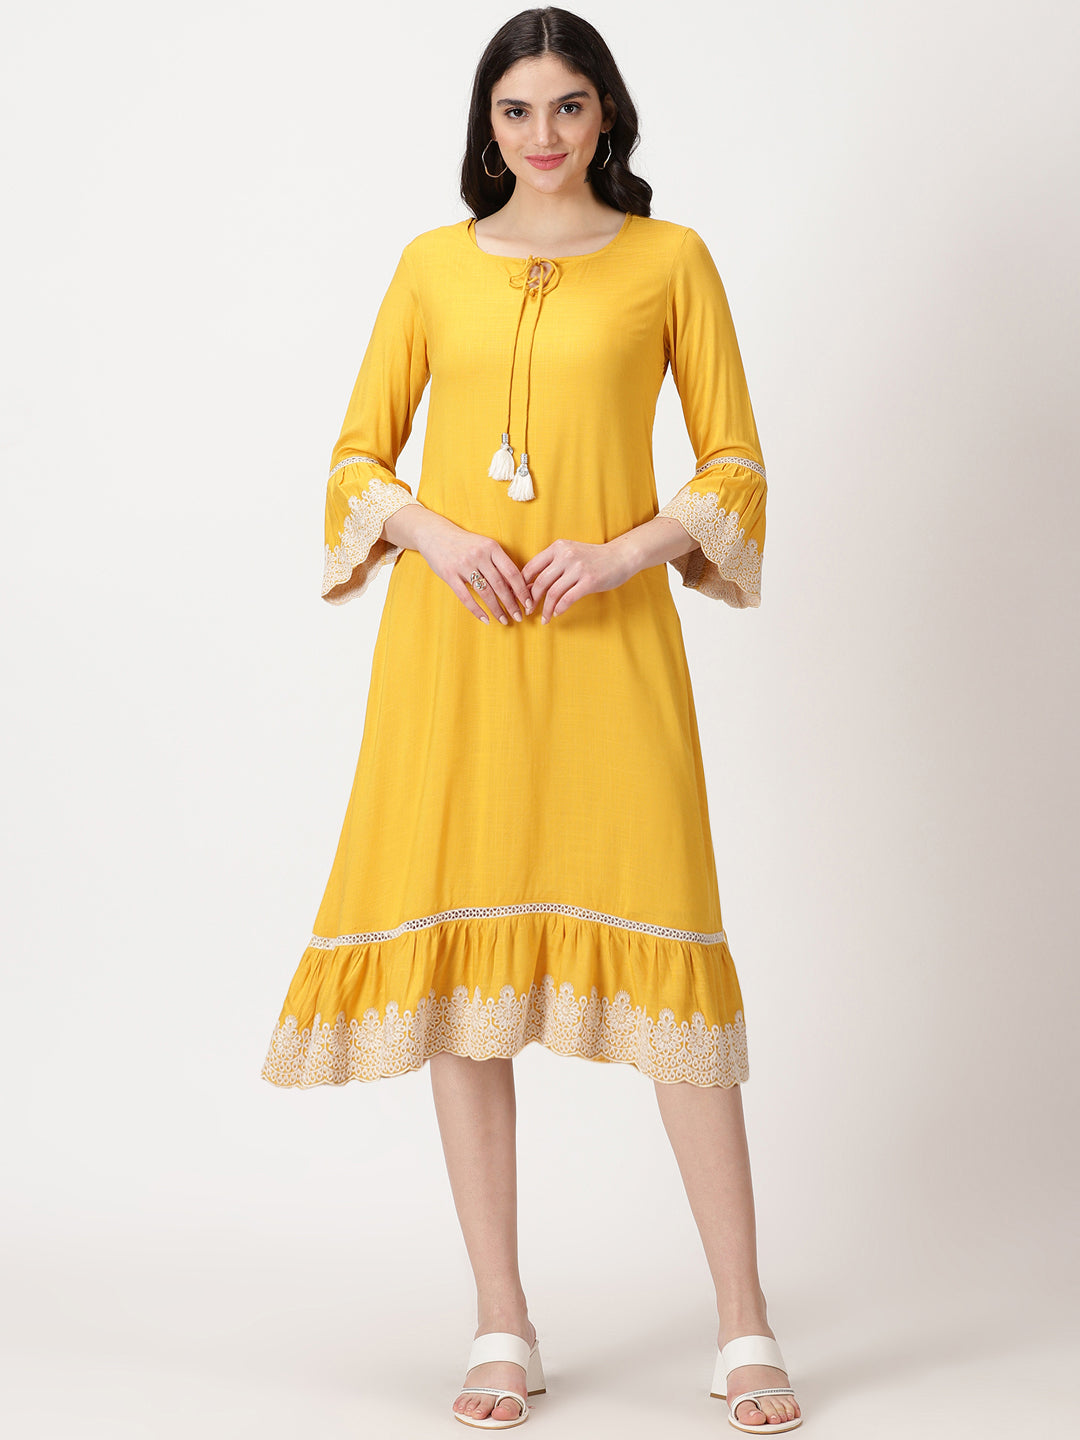 Buy Latest Festive Designer Cotton Satin Printed Salwar Kameez Pant style  Muslim Punjabi Party Dress Semi-stitch 7892 at Amazon.in